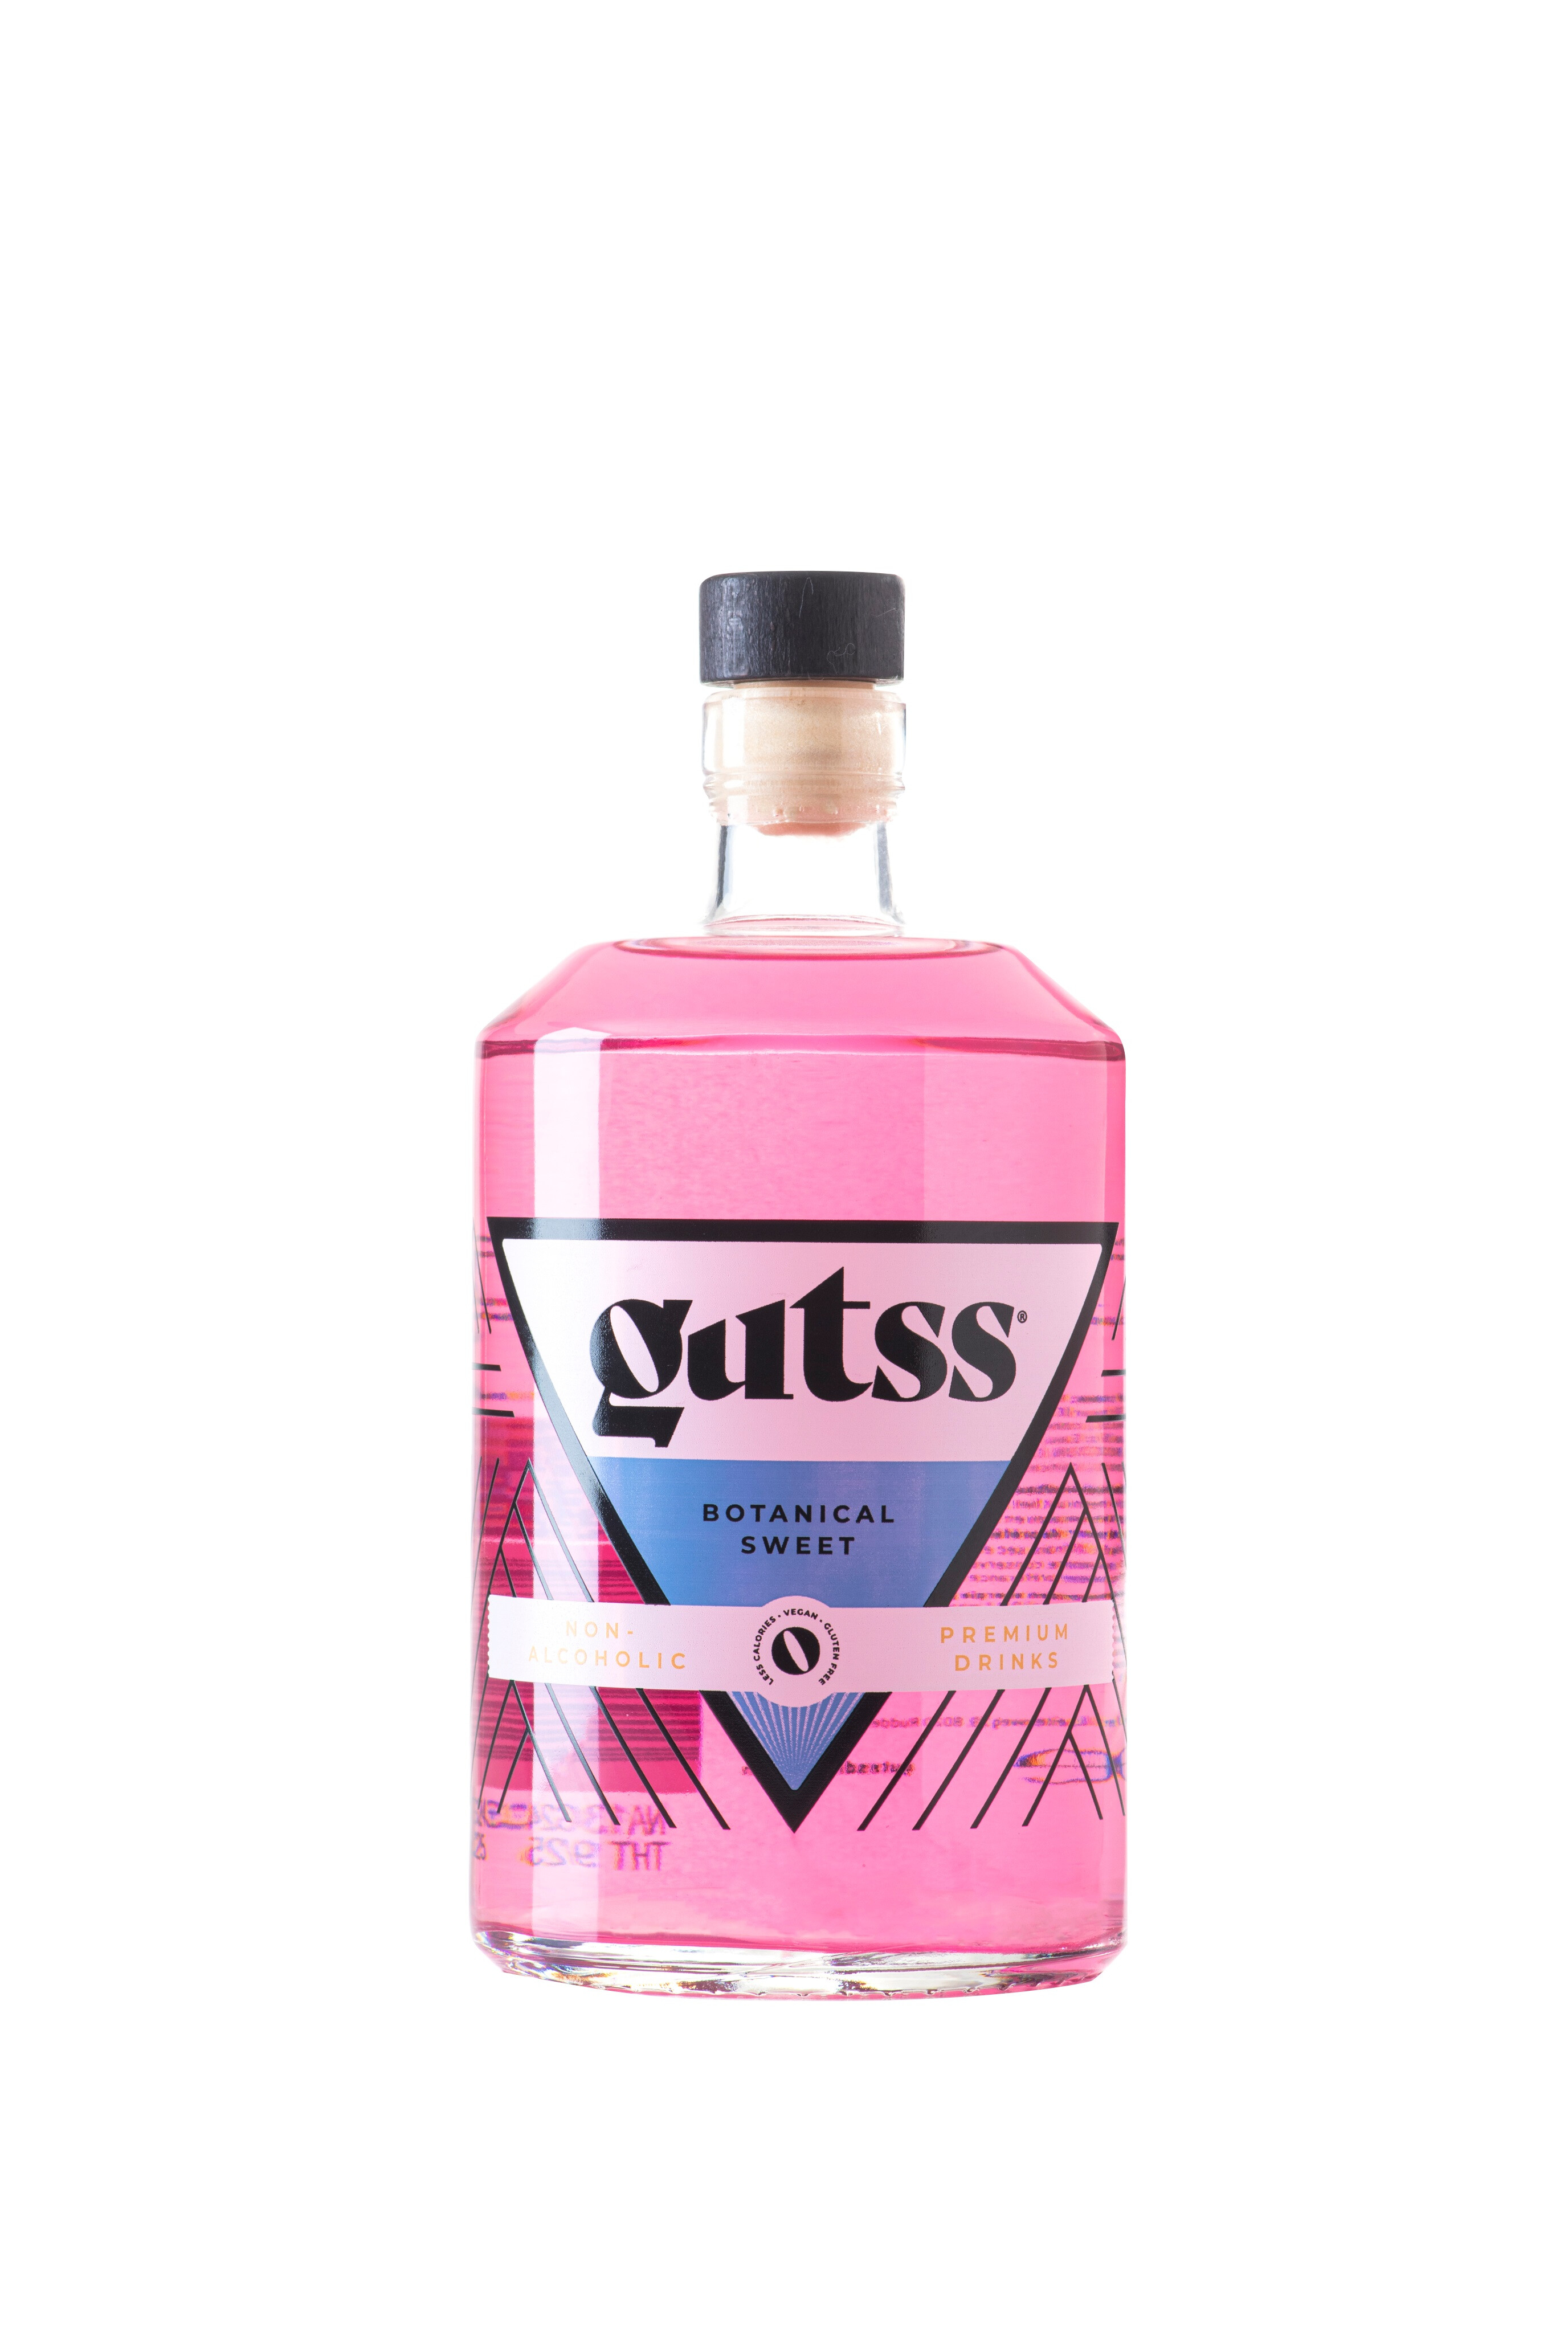 Gutss Botanical Sweet 70cl 0% Gin sans alcool